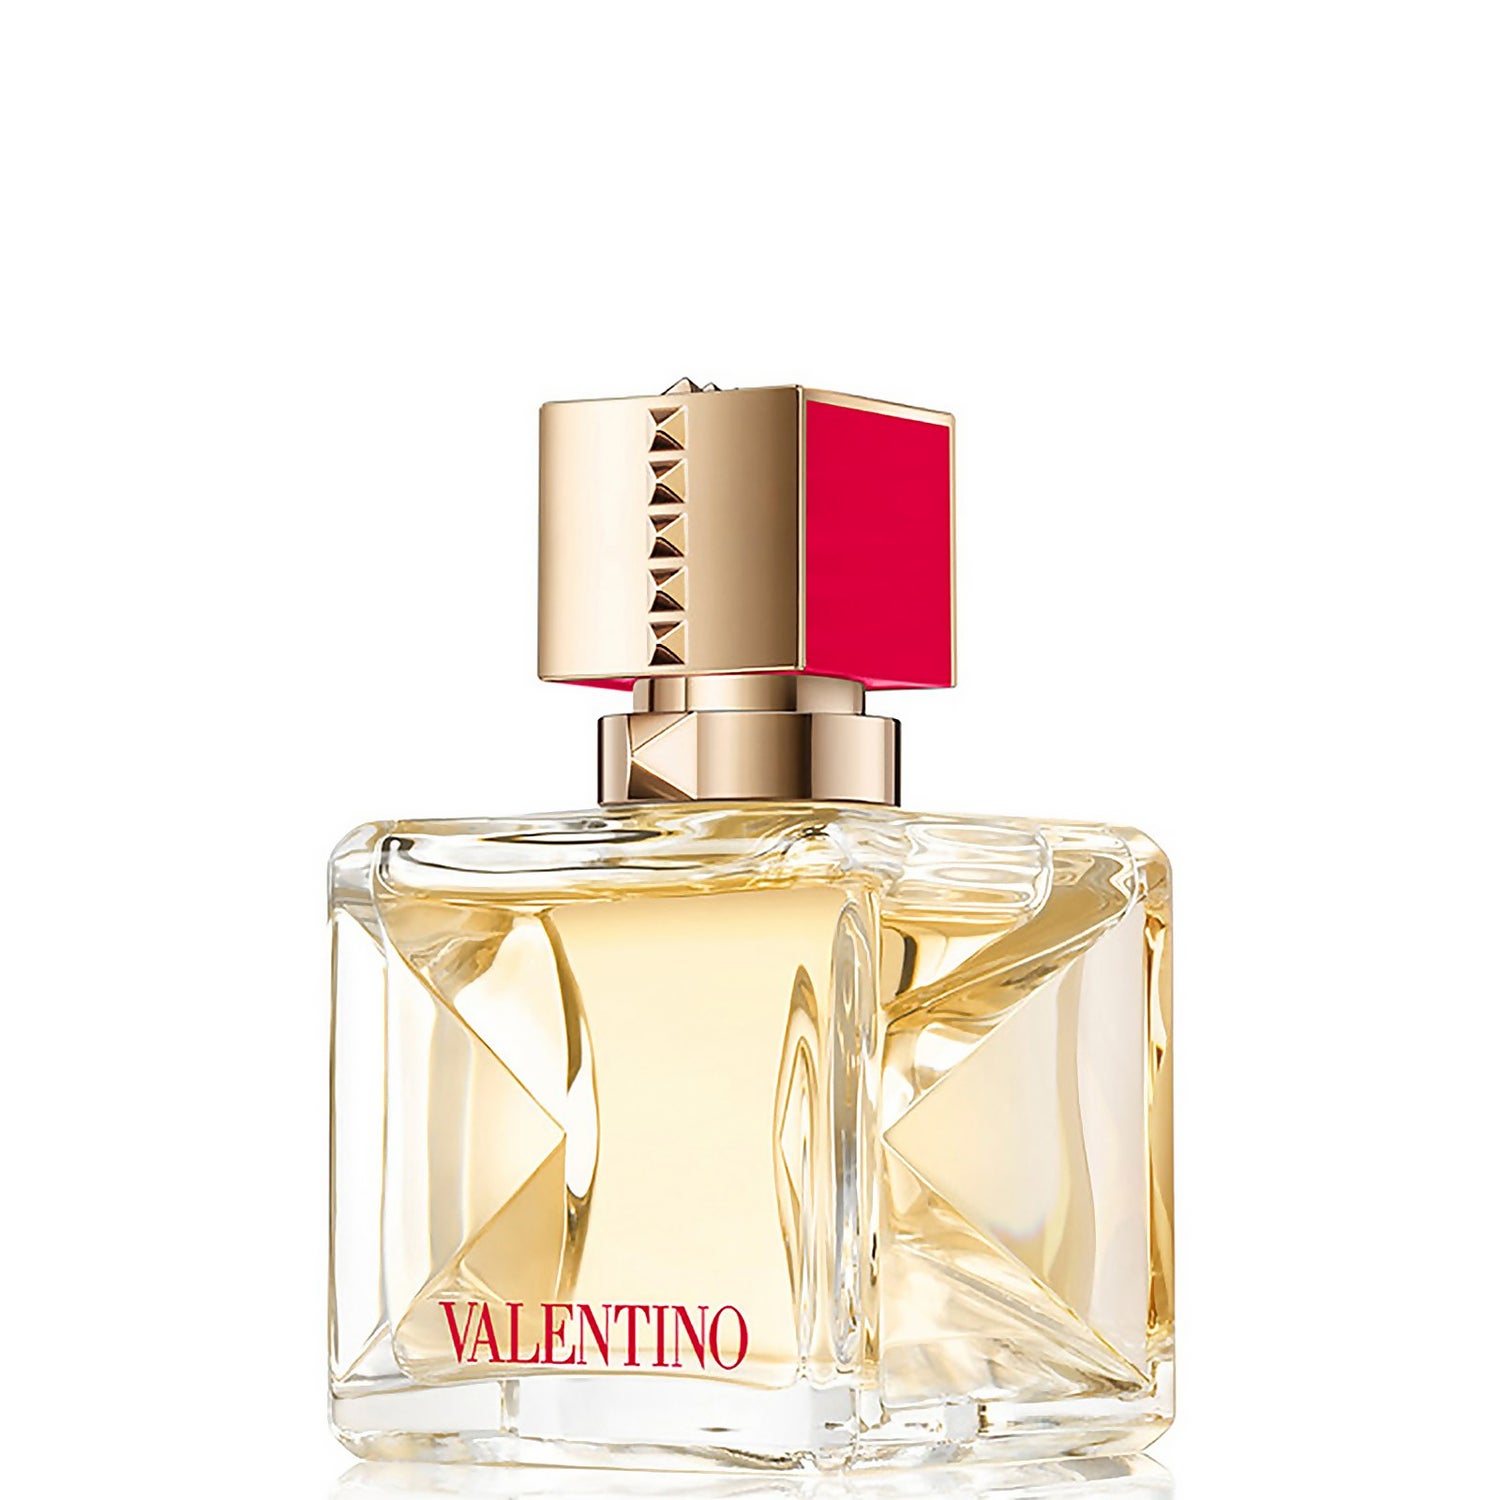 Valentino Voce Viva Eau de Parfum for Women - 50ml Valentino Voce Viva dámská parfémovaná voda - 50 ml